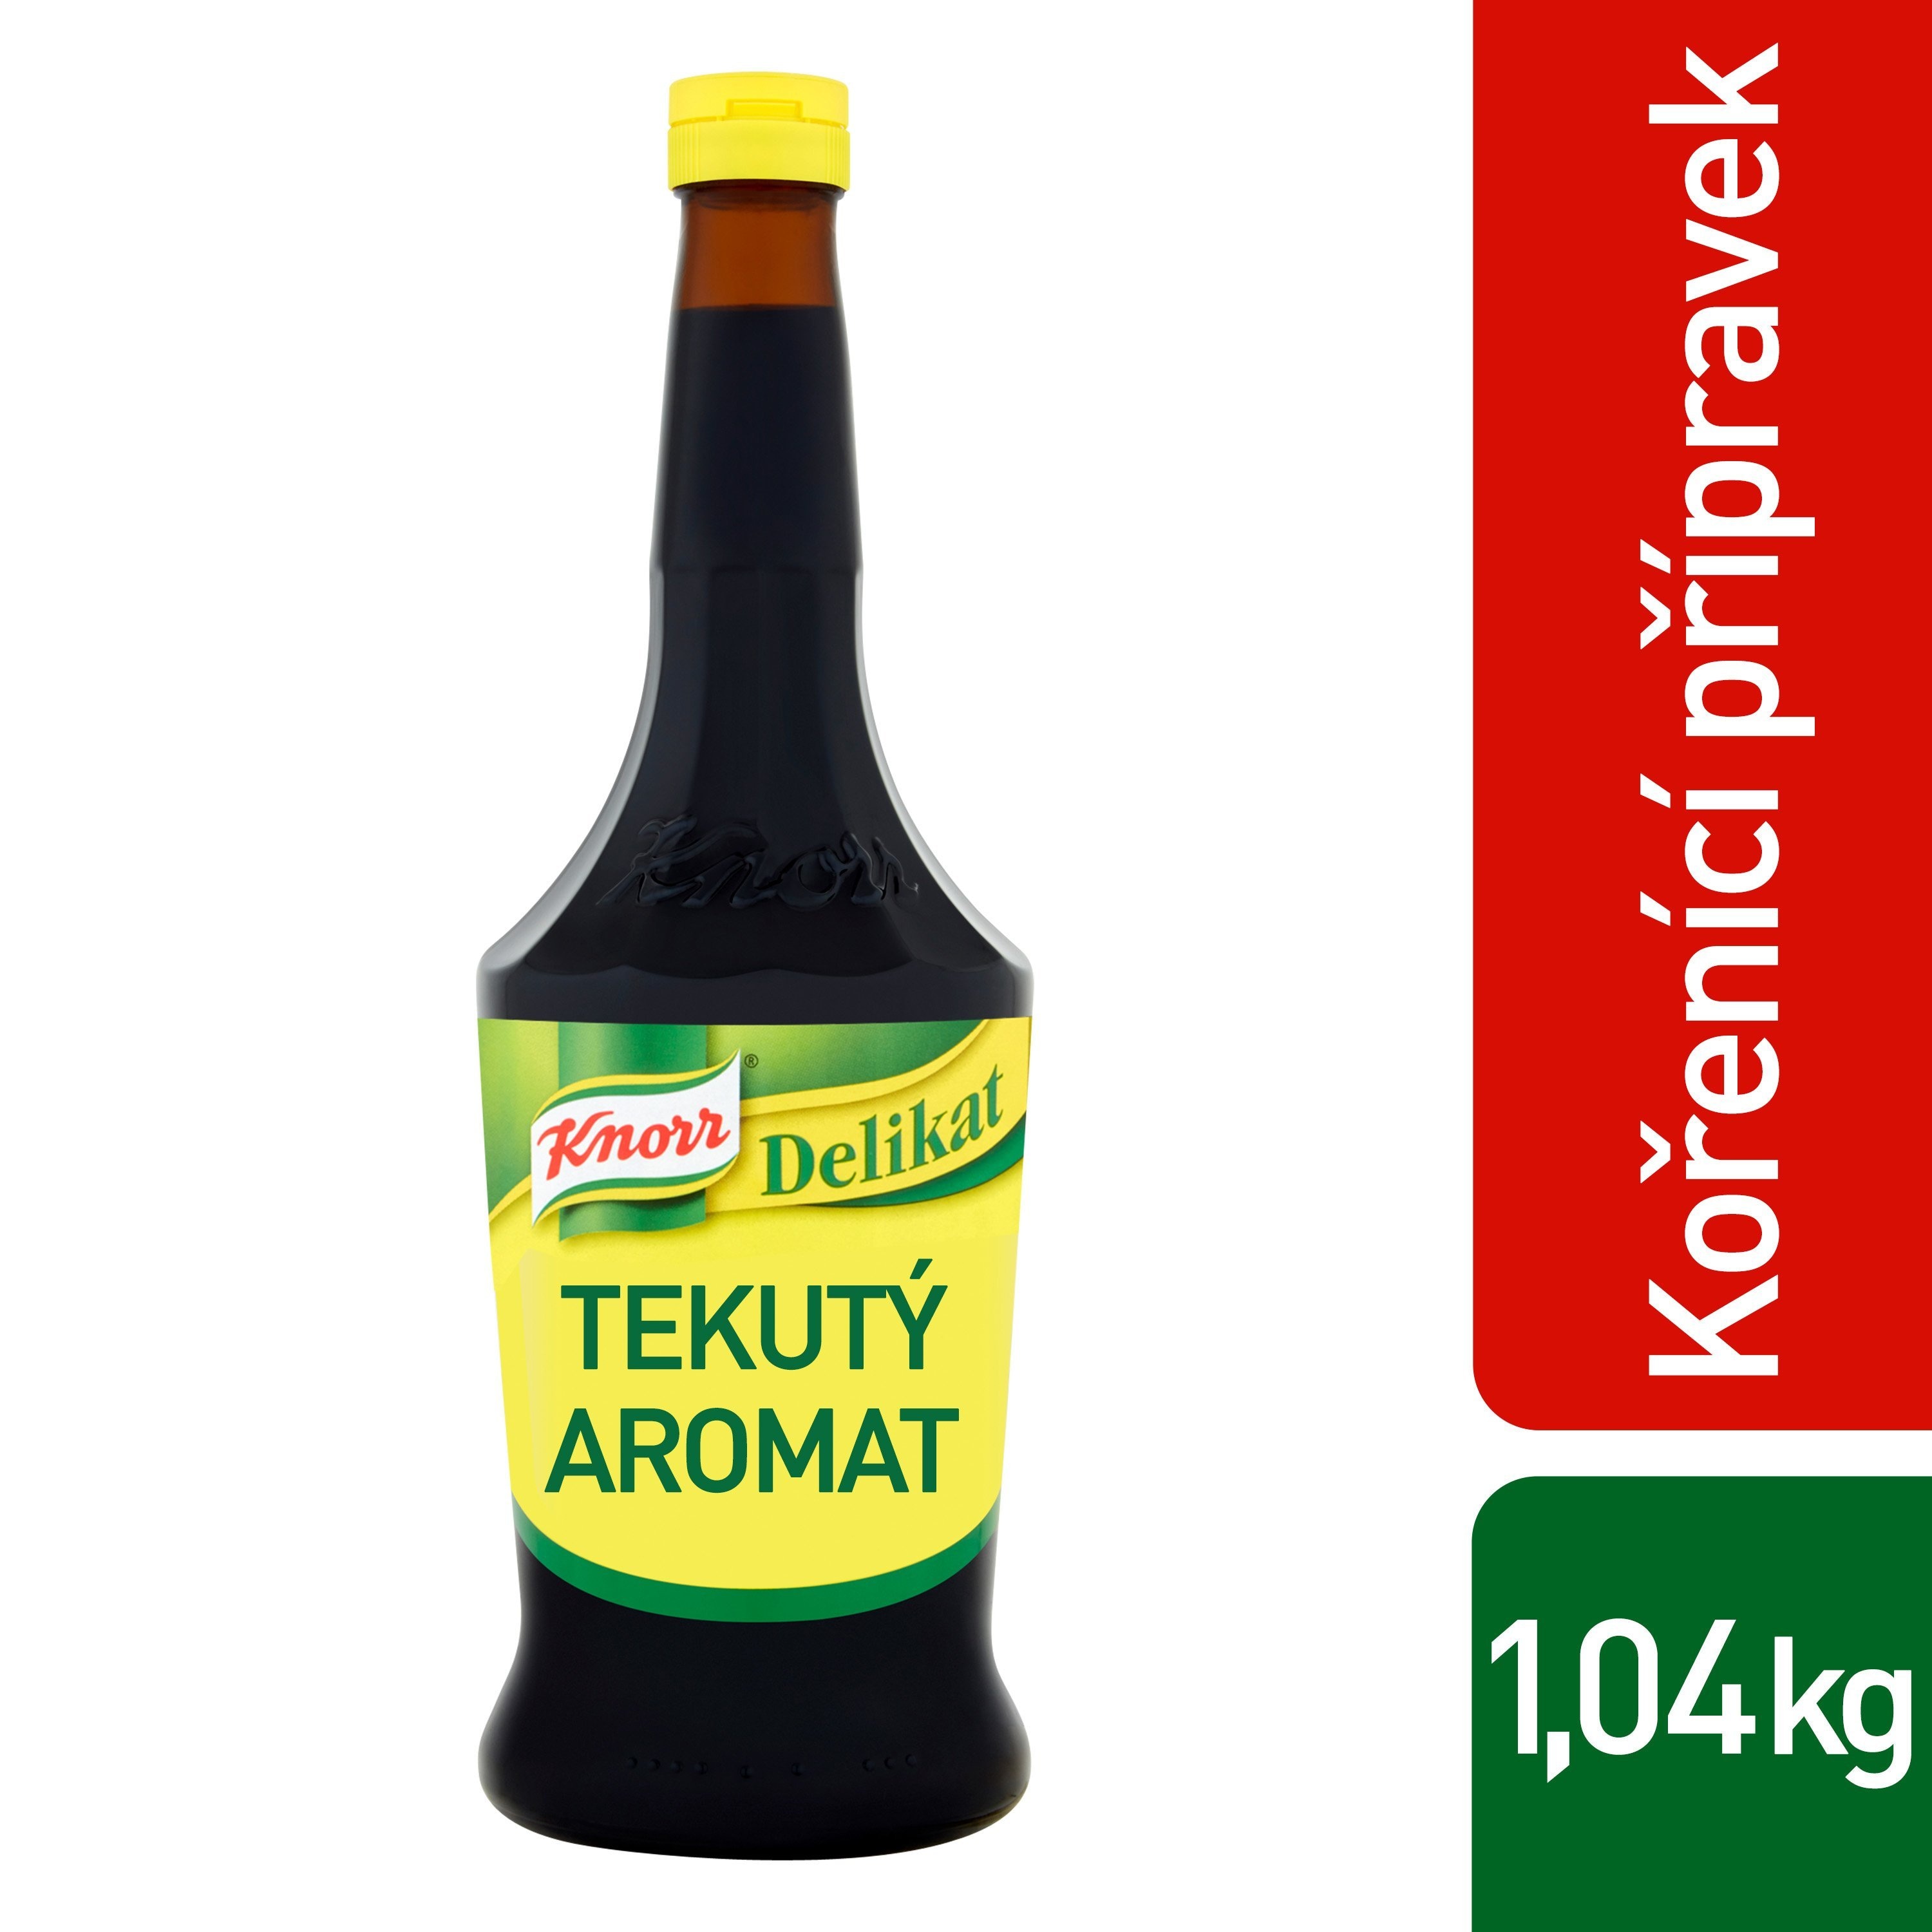 Knorr Tekutý Aromat 1,04 kg